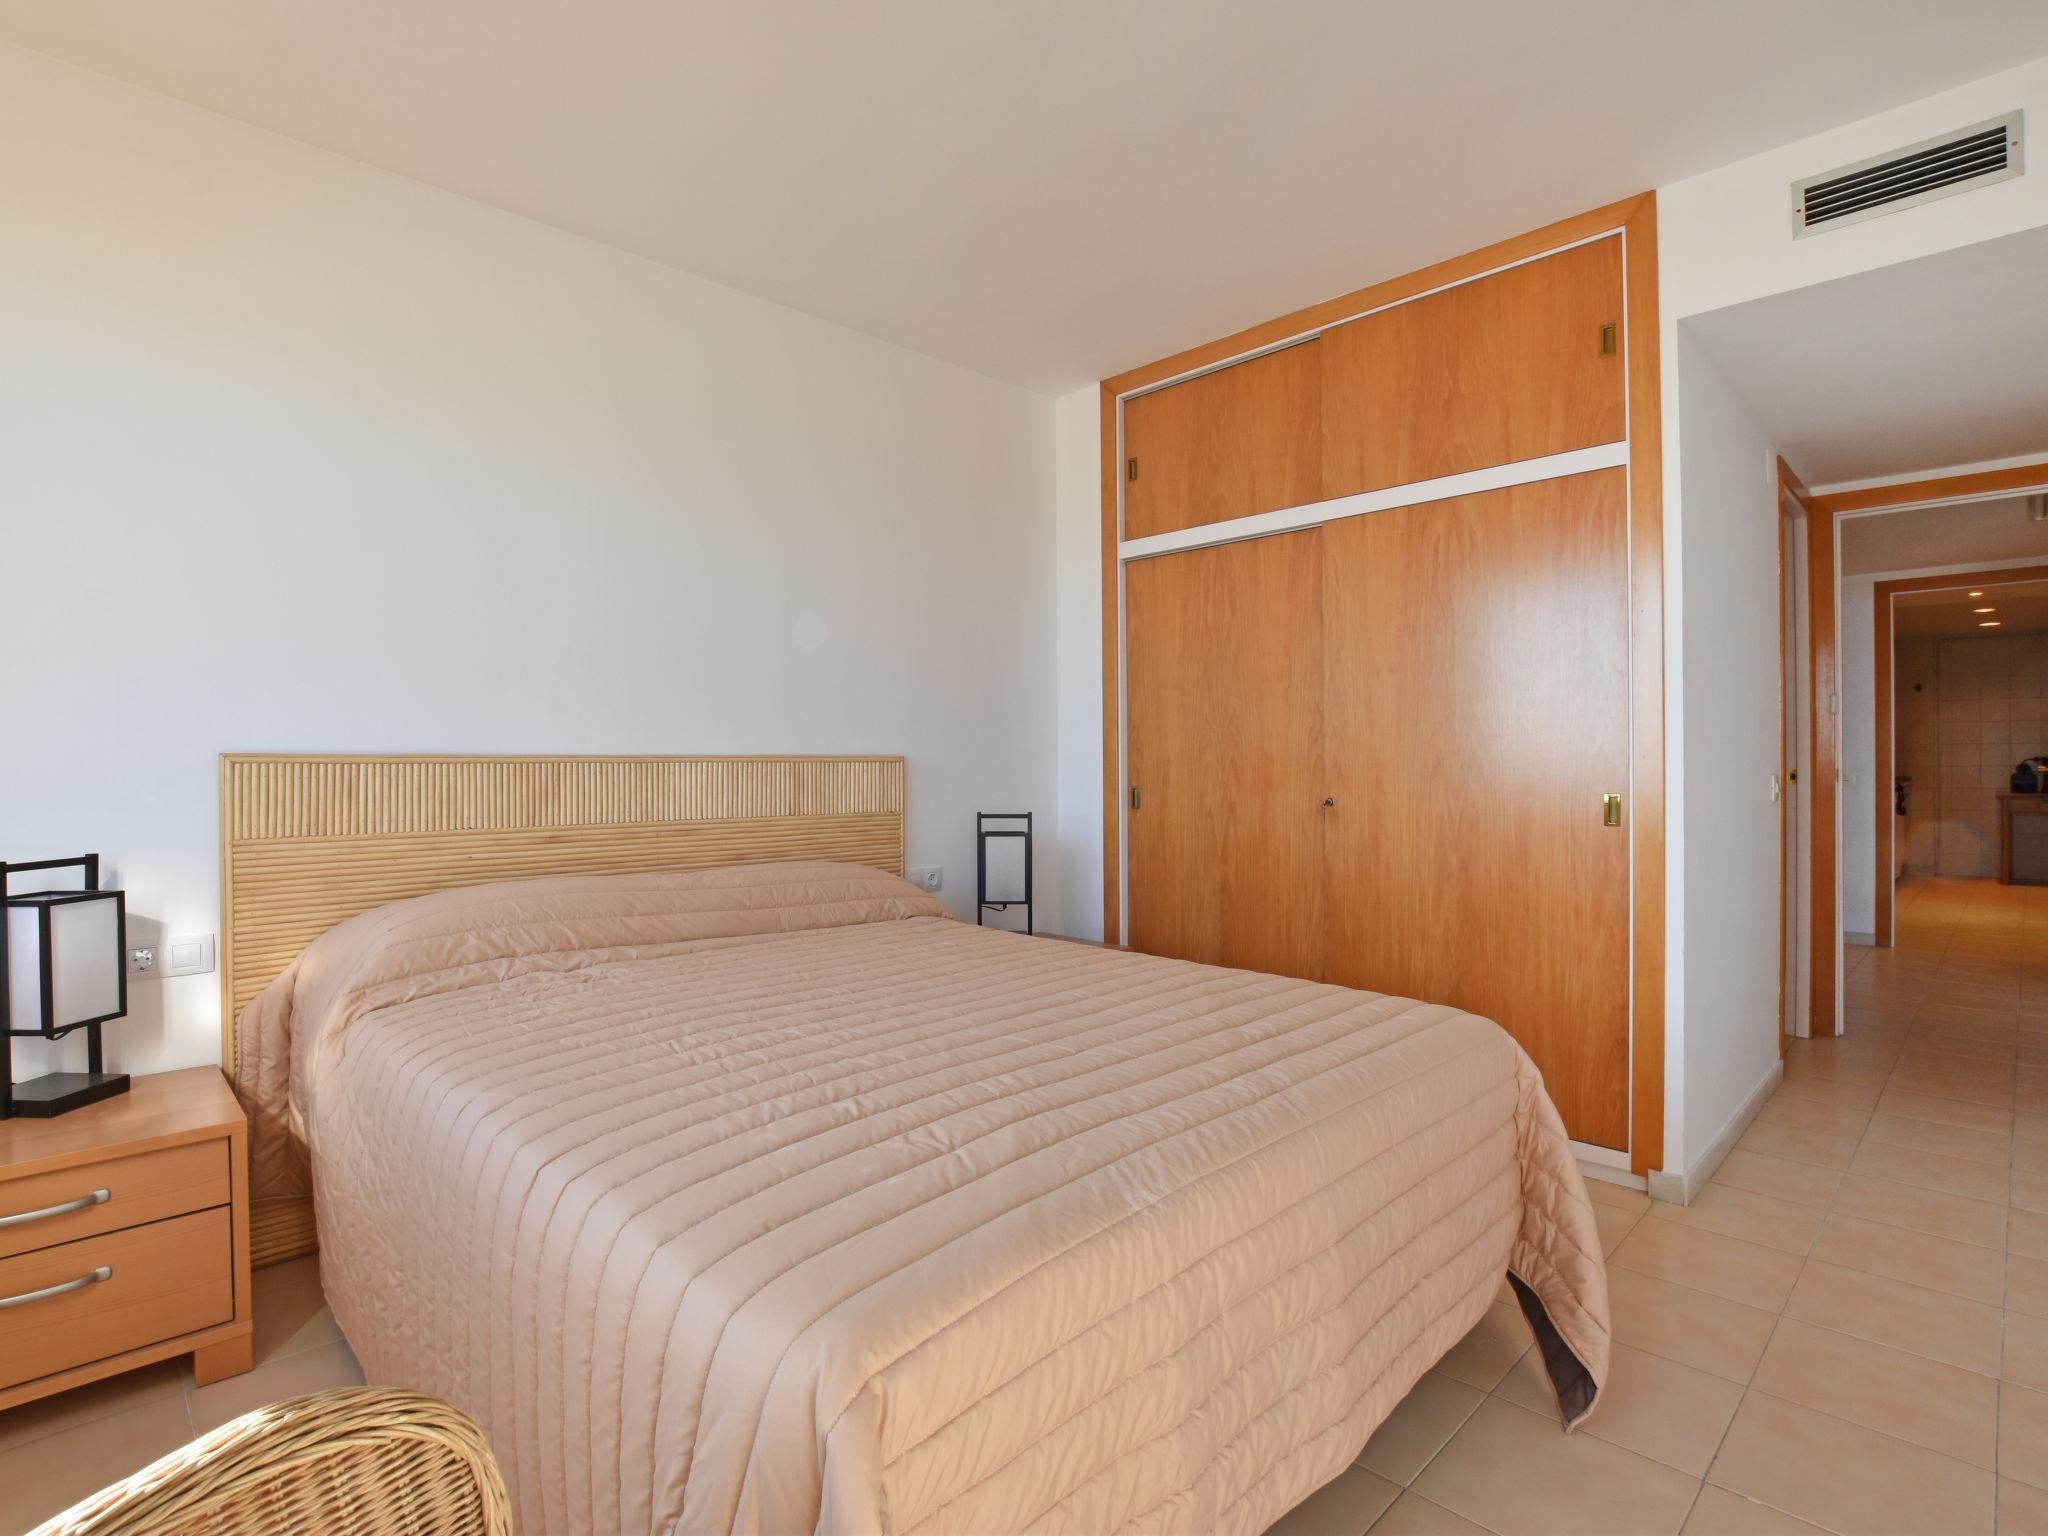 Photo 15 - Appartement de 4 chambres à Torredembarra avec piscine et vues à la mer